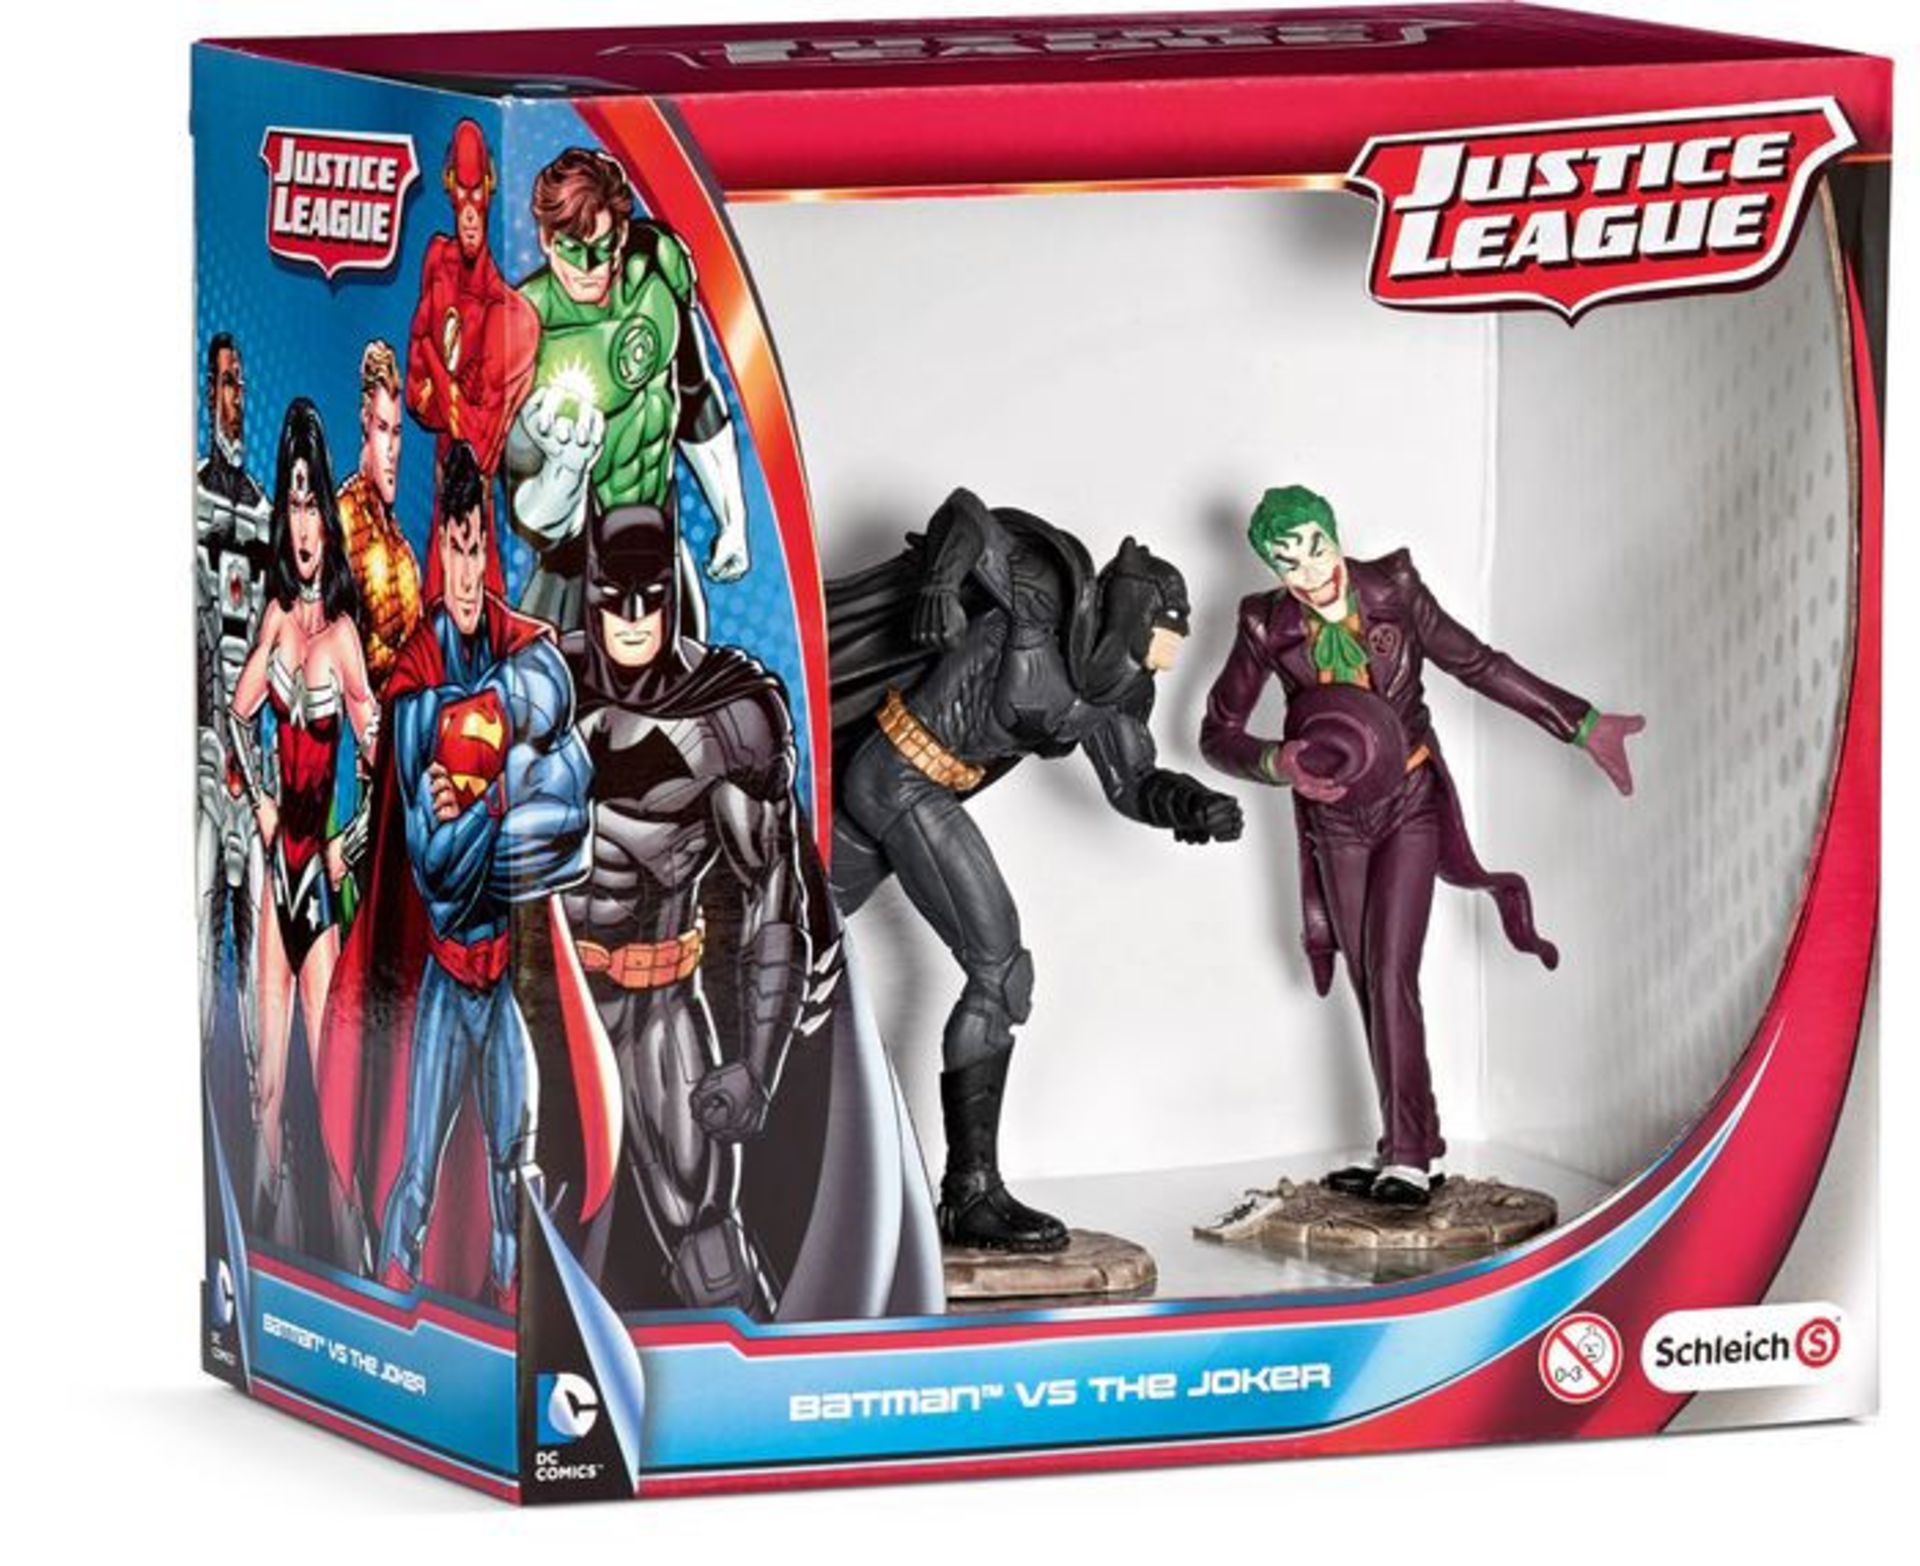 V *TRADE QTY* Brand New Justice League Batman vs Joker Figures eBay Price £15.99 X 3 YOUR BID